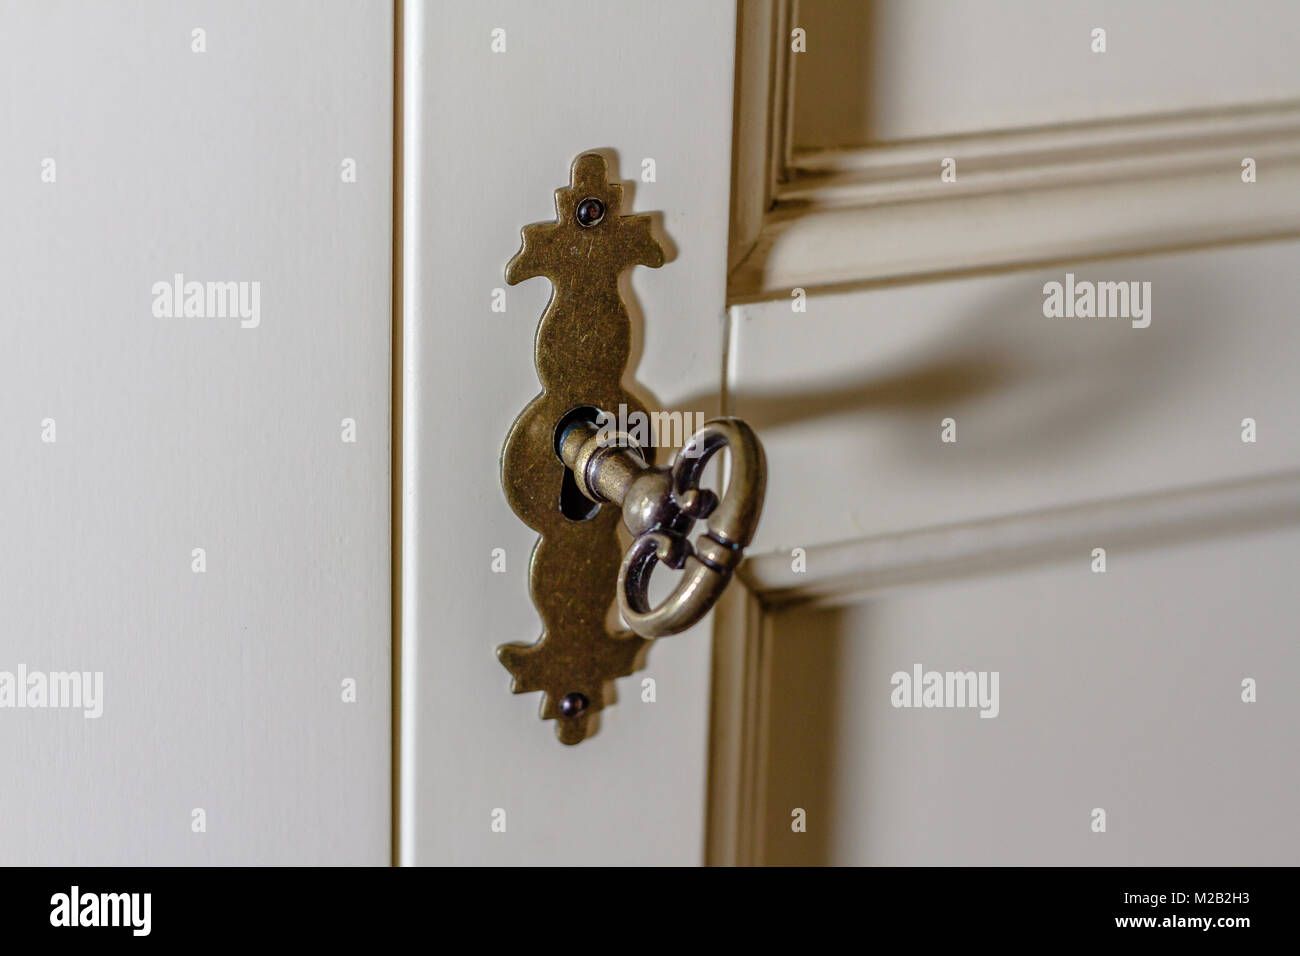 Decorative key in a lock on a cupboard Stock Photo